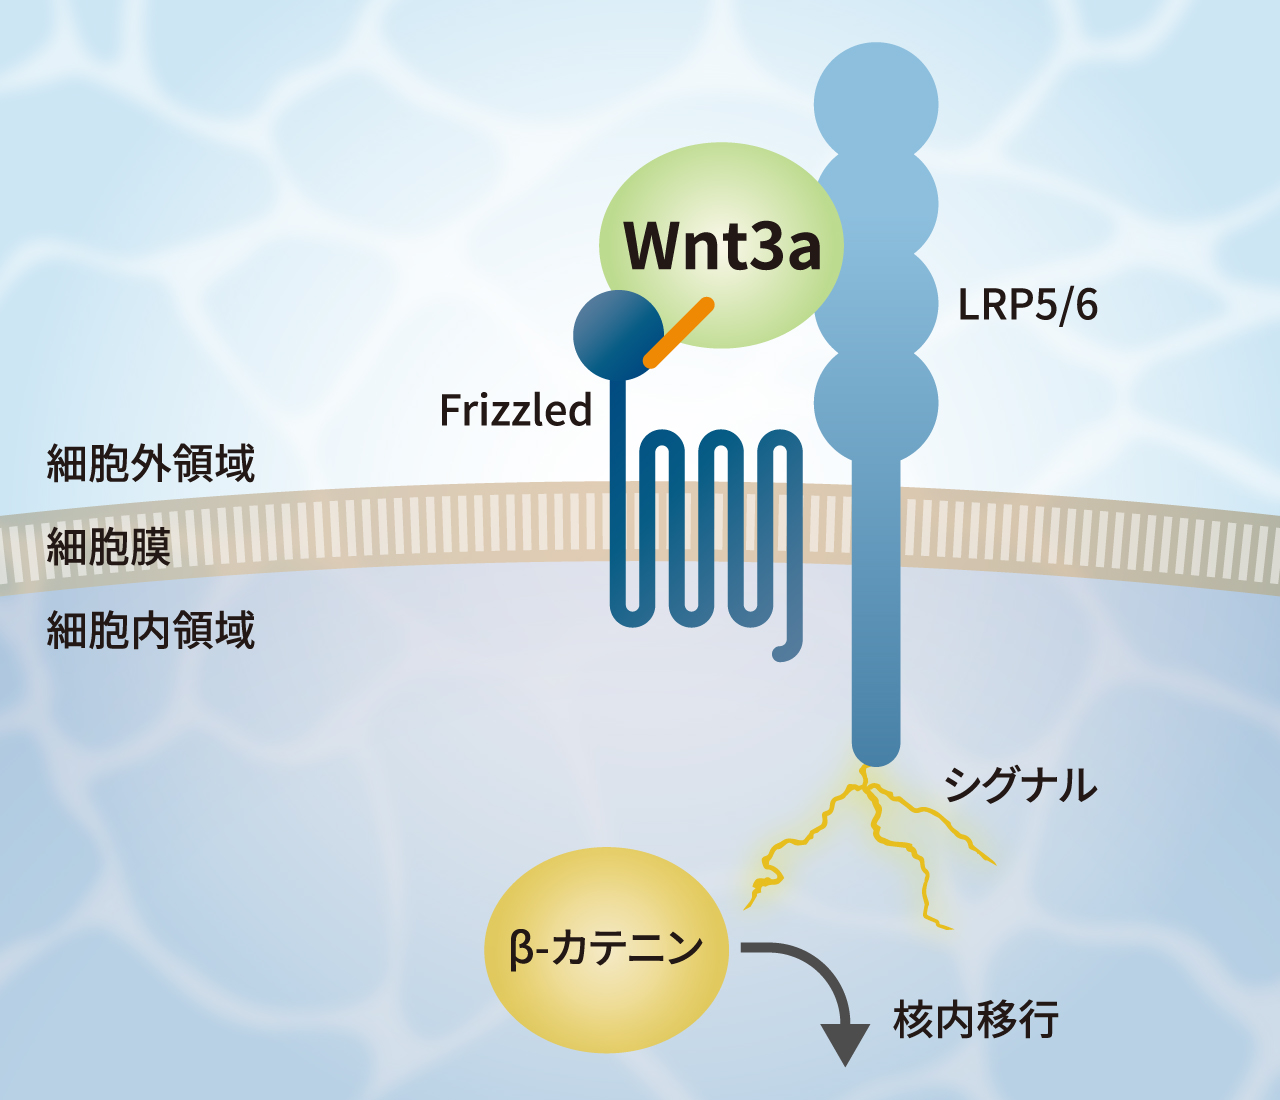 Want3aのβ-カテニン経路活性化機構